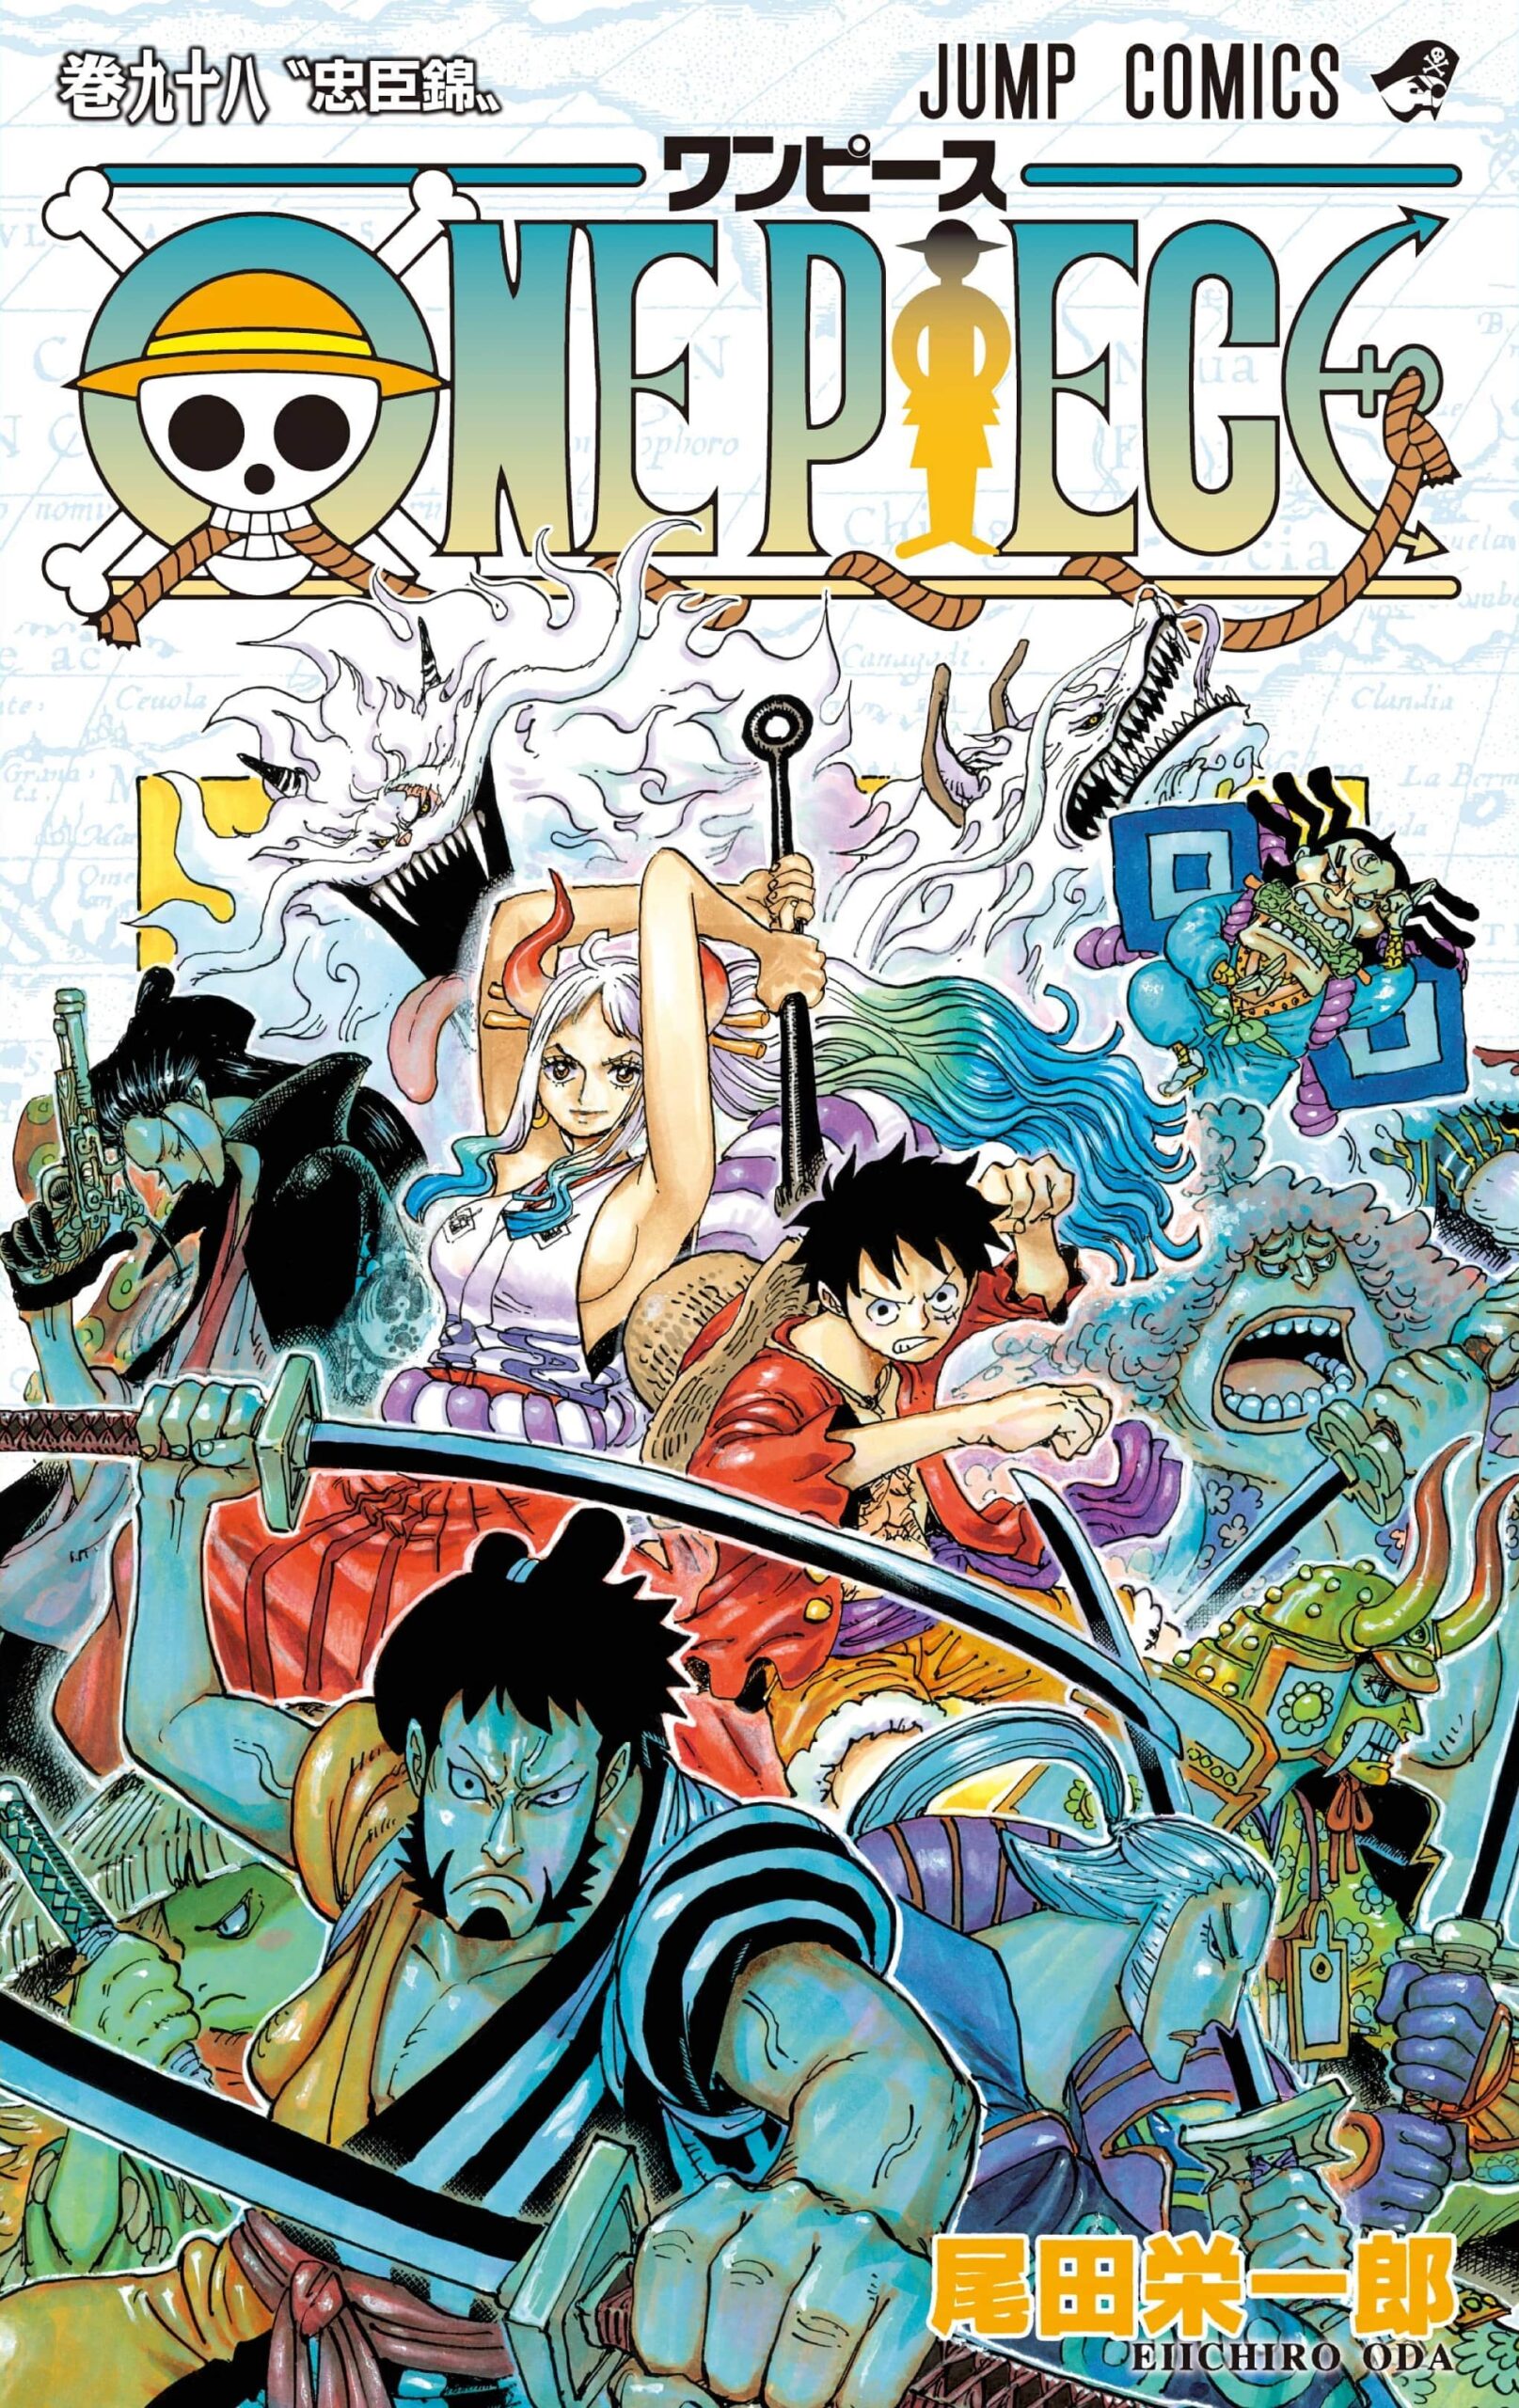 One Piece Manga 480 Million Copies In Distribution